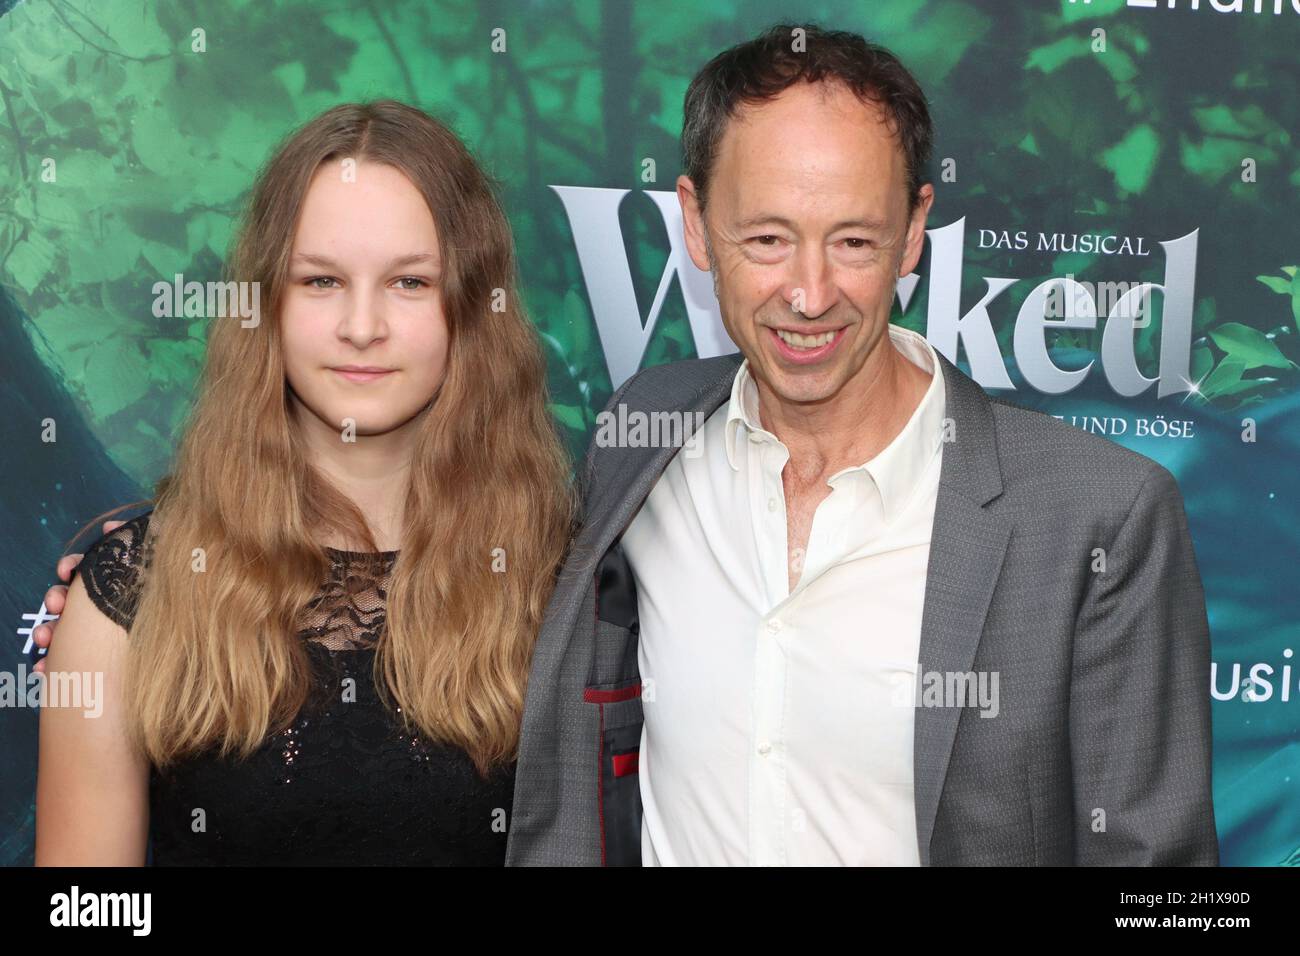 Frederik Braun & Tochter Johahnna, première de Wicked, Neue Flora Hamburg,  05.09.2021 Photo Stock - Alamy